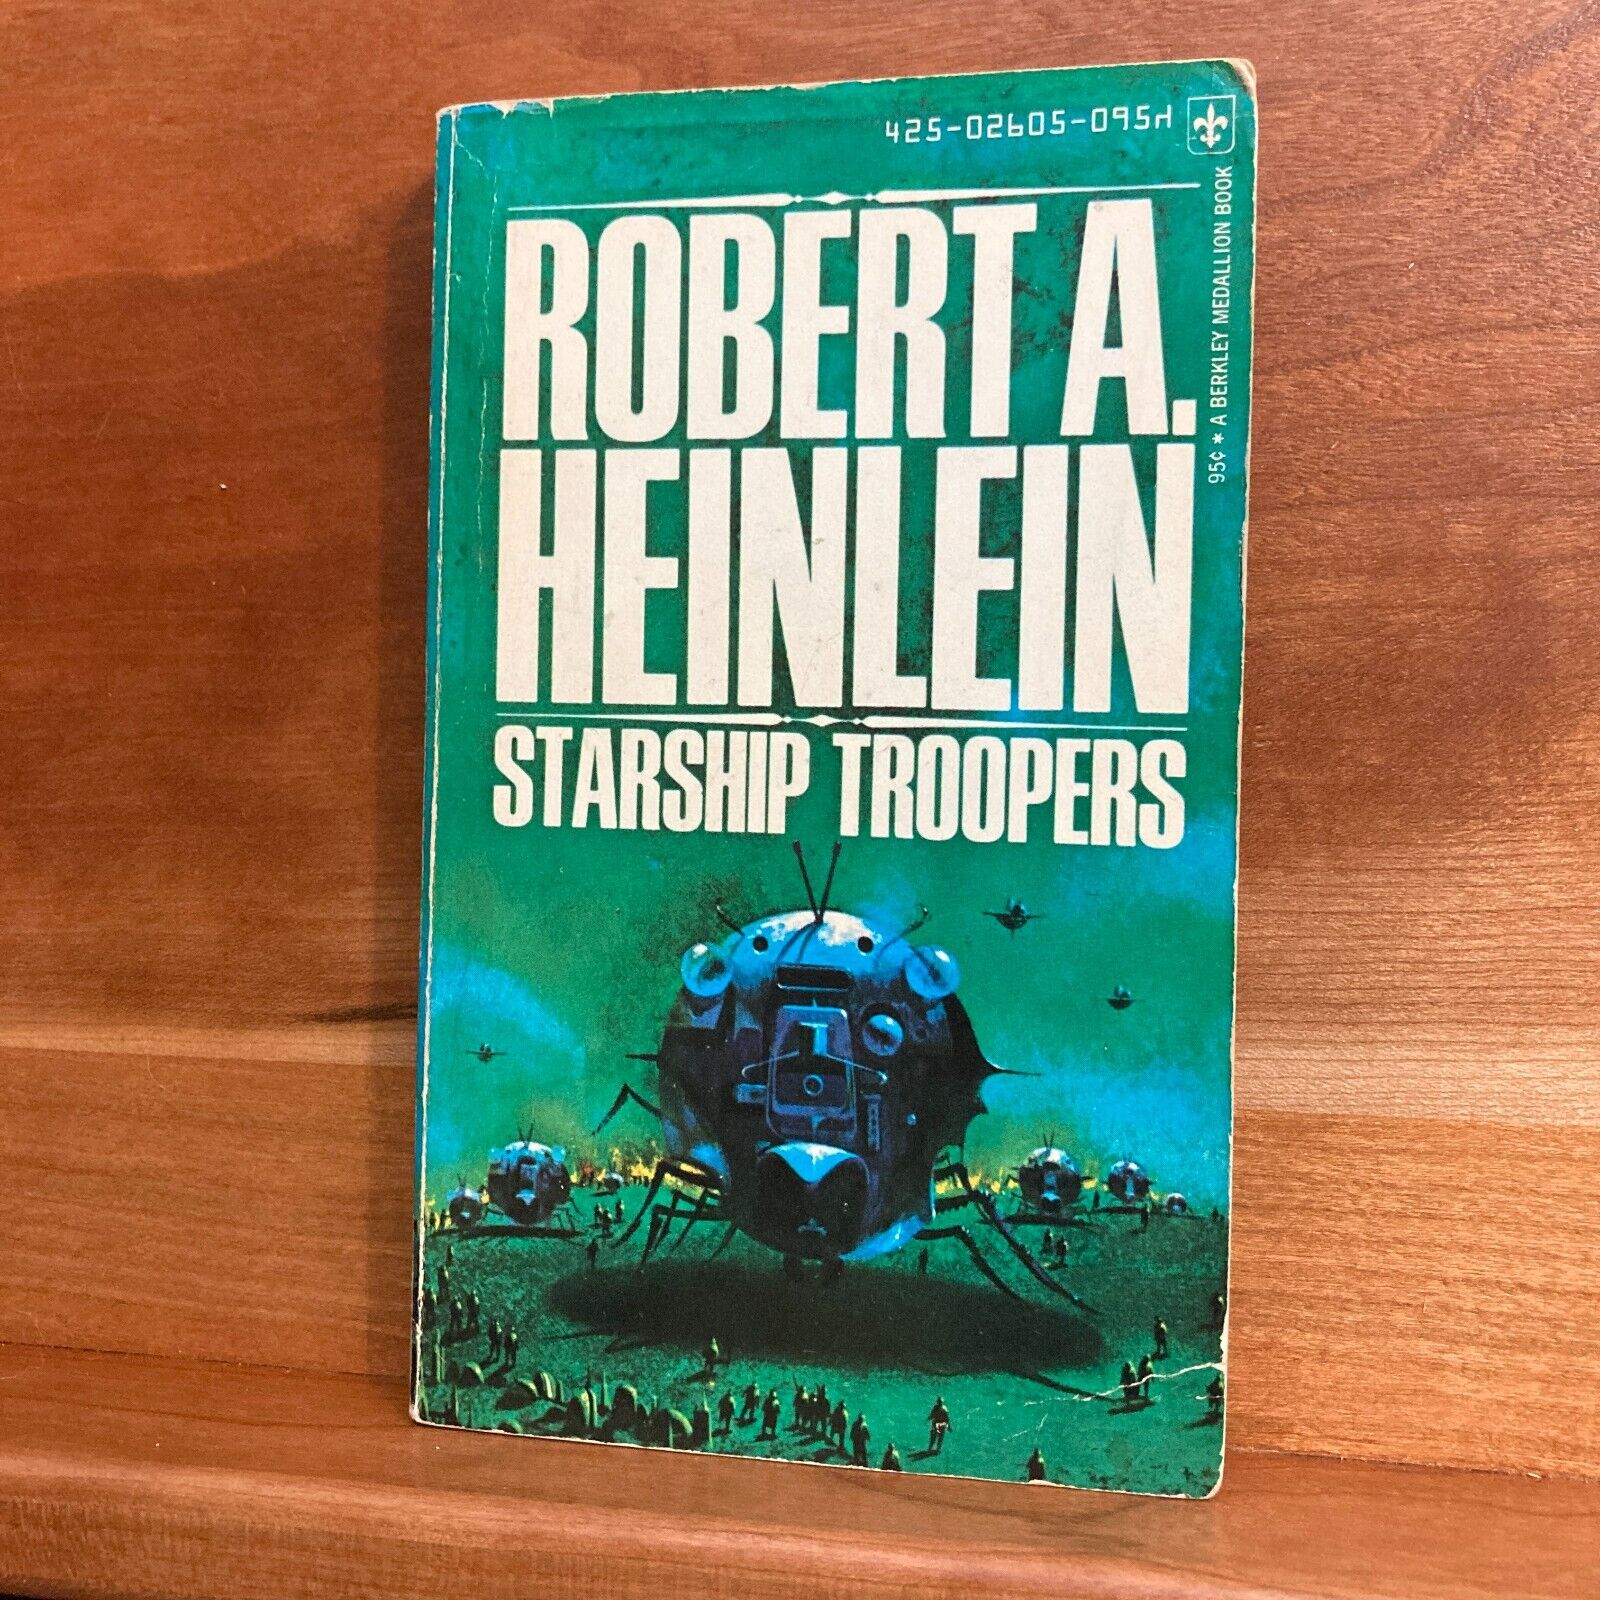 Starship Troopers by Robert A. Heinlein Paperback 1968 Vintage SciFi Book